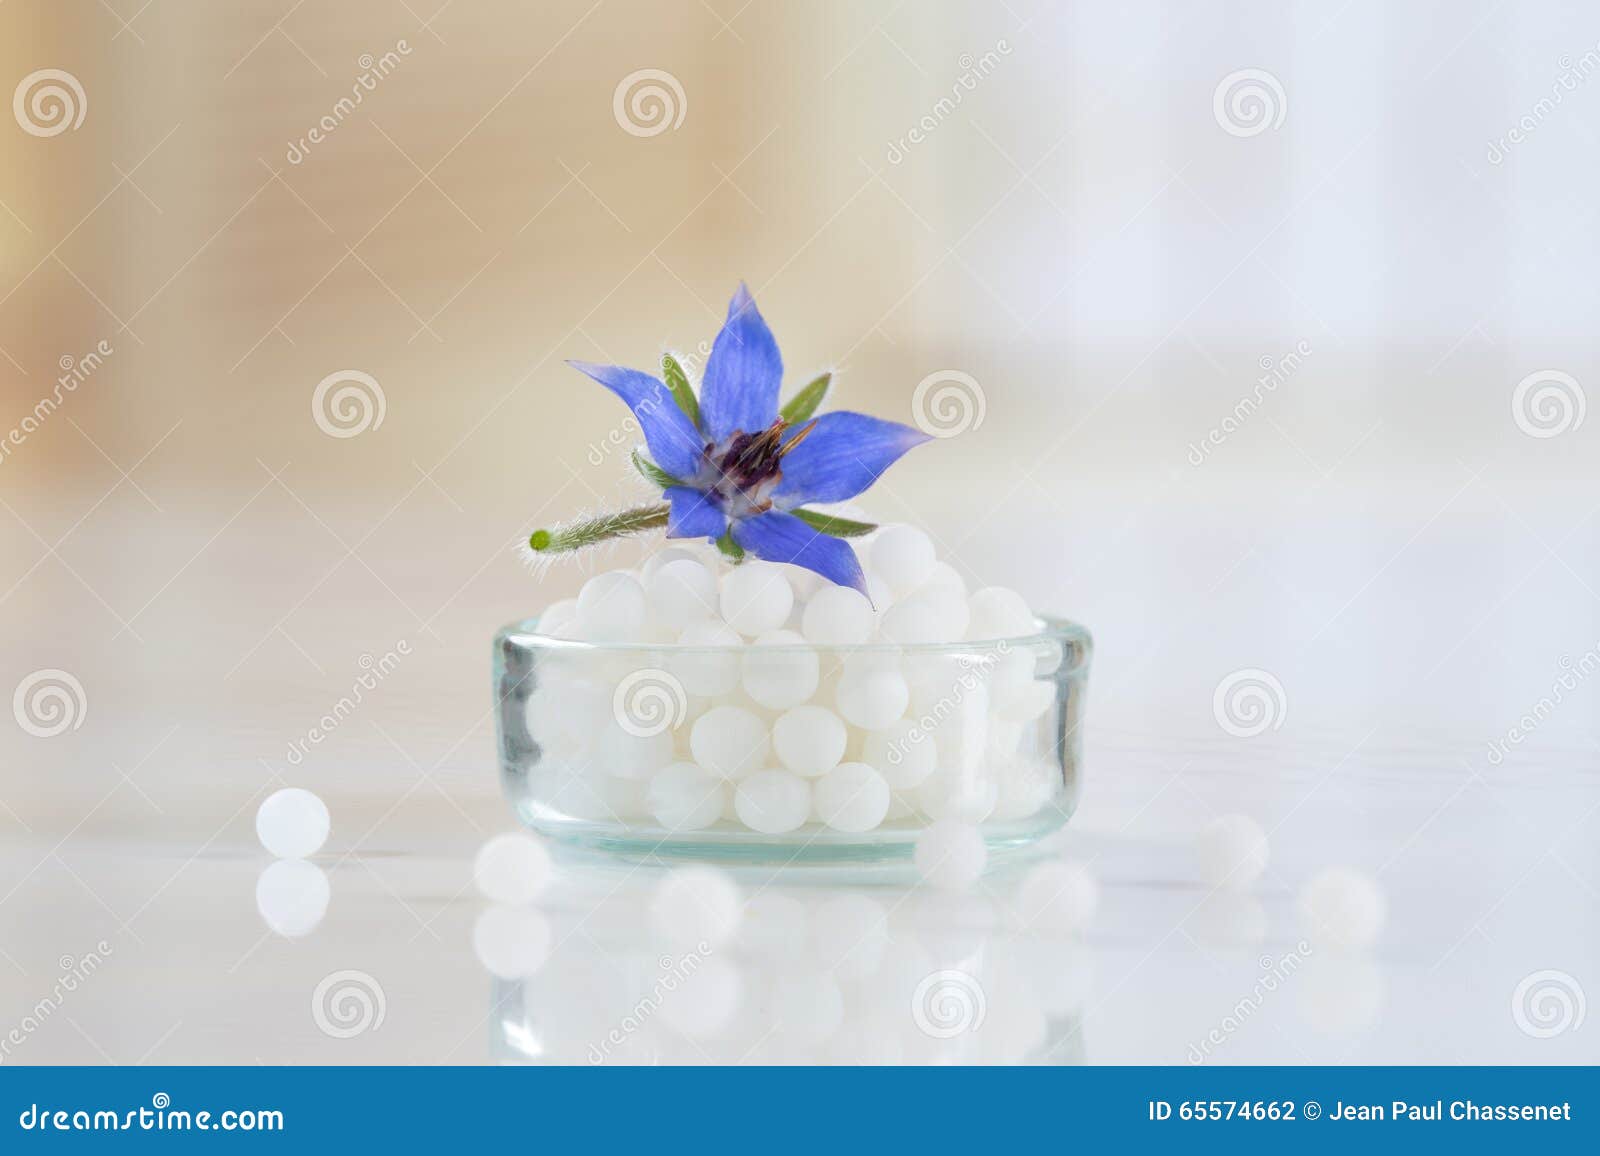 homeopathy globules with borage flower